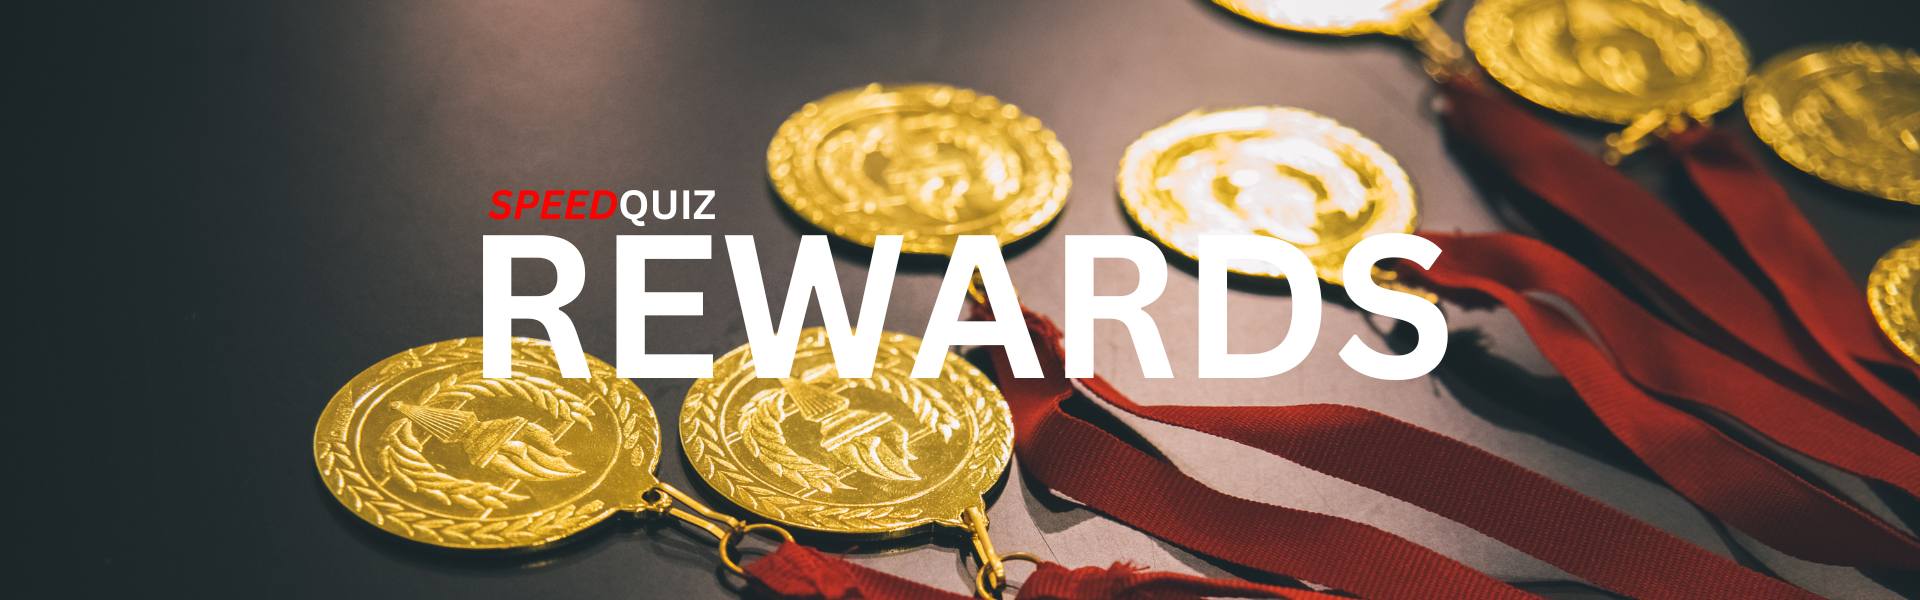 Quiz Rewards Quizzes and trivia